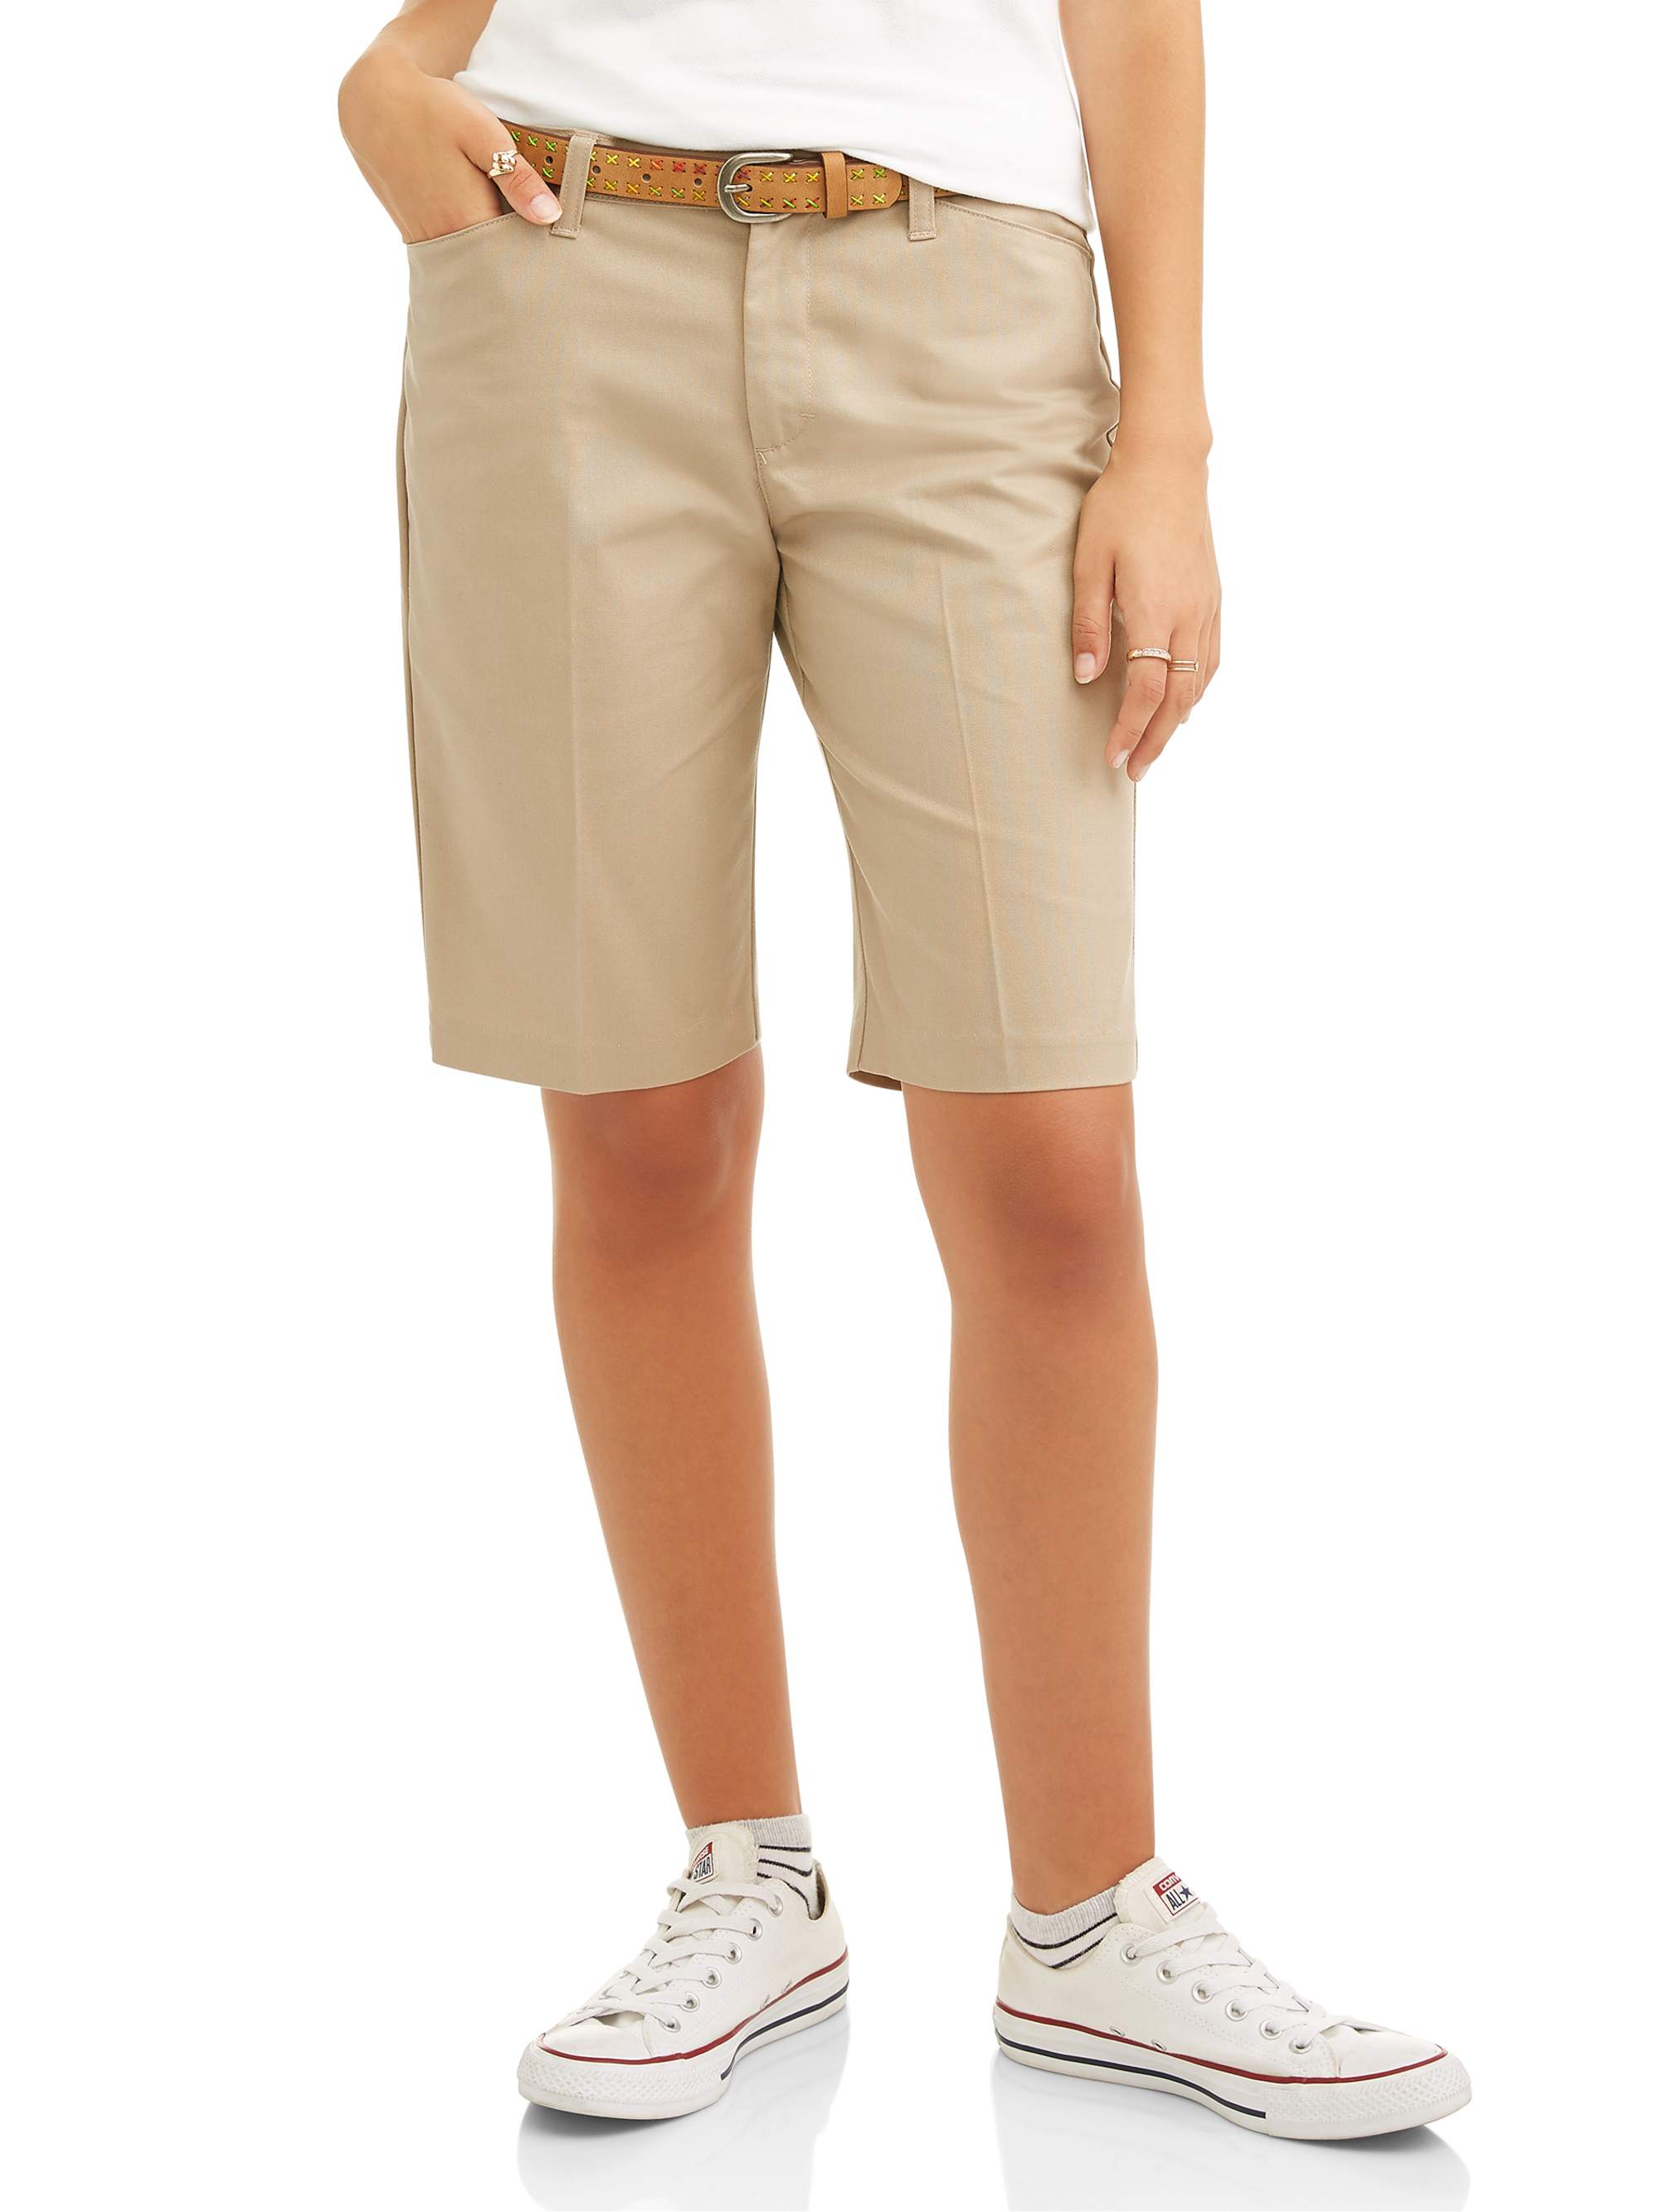 Real School Juniors' Flat Front Low Rise School Uniform Shorts - image 1 of 3